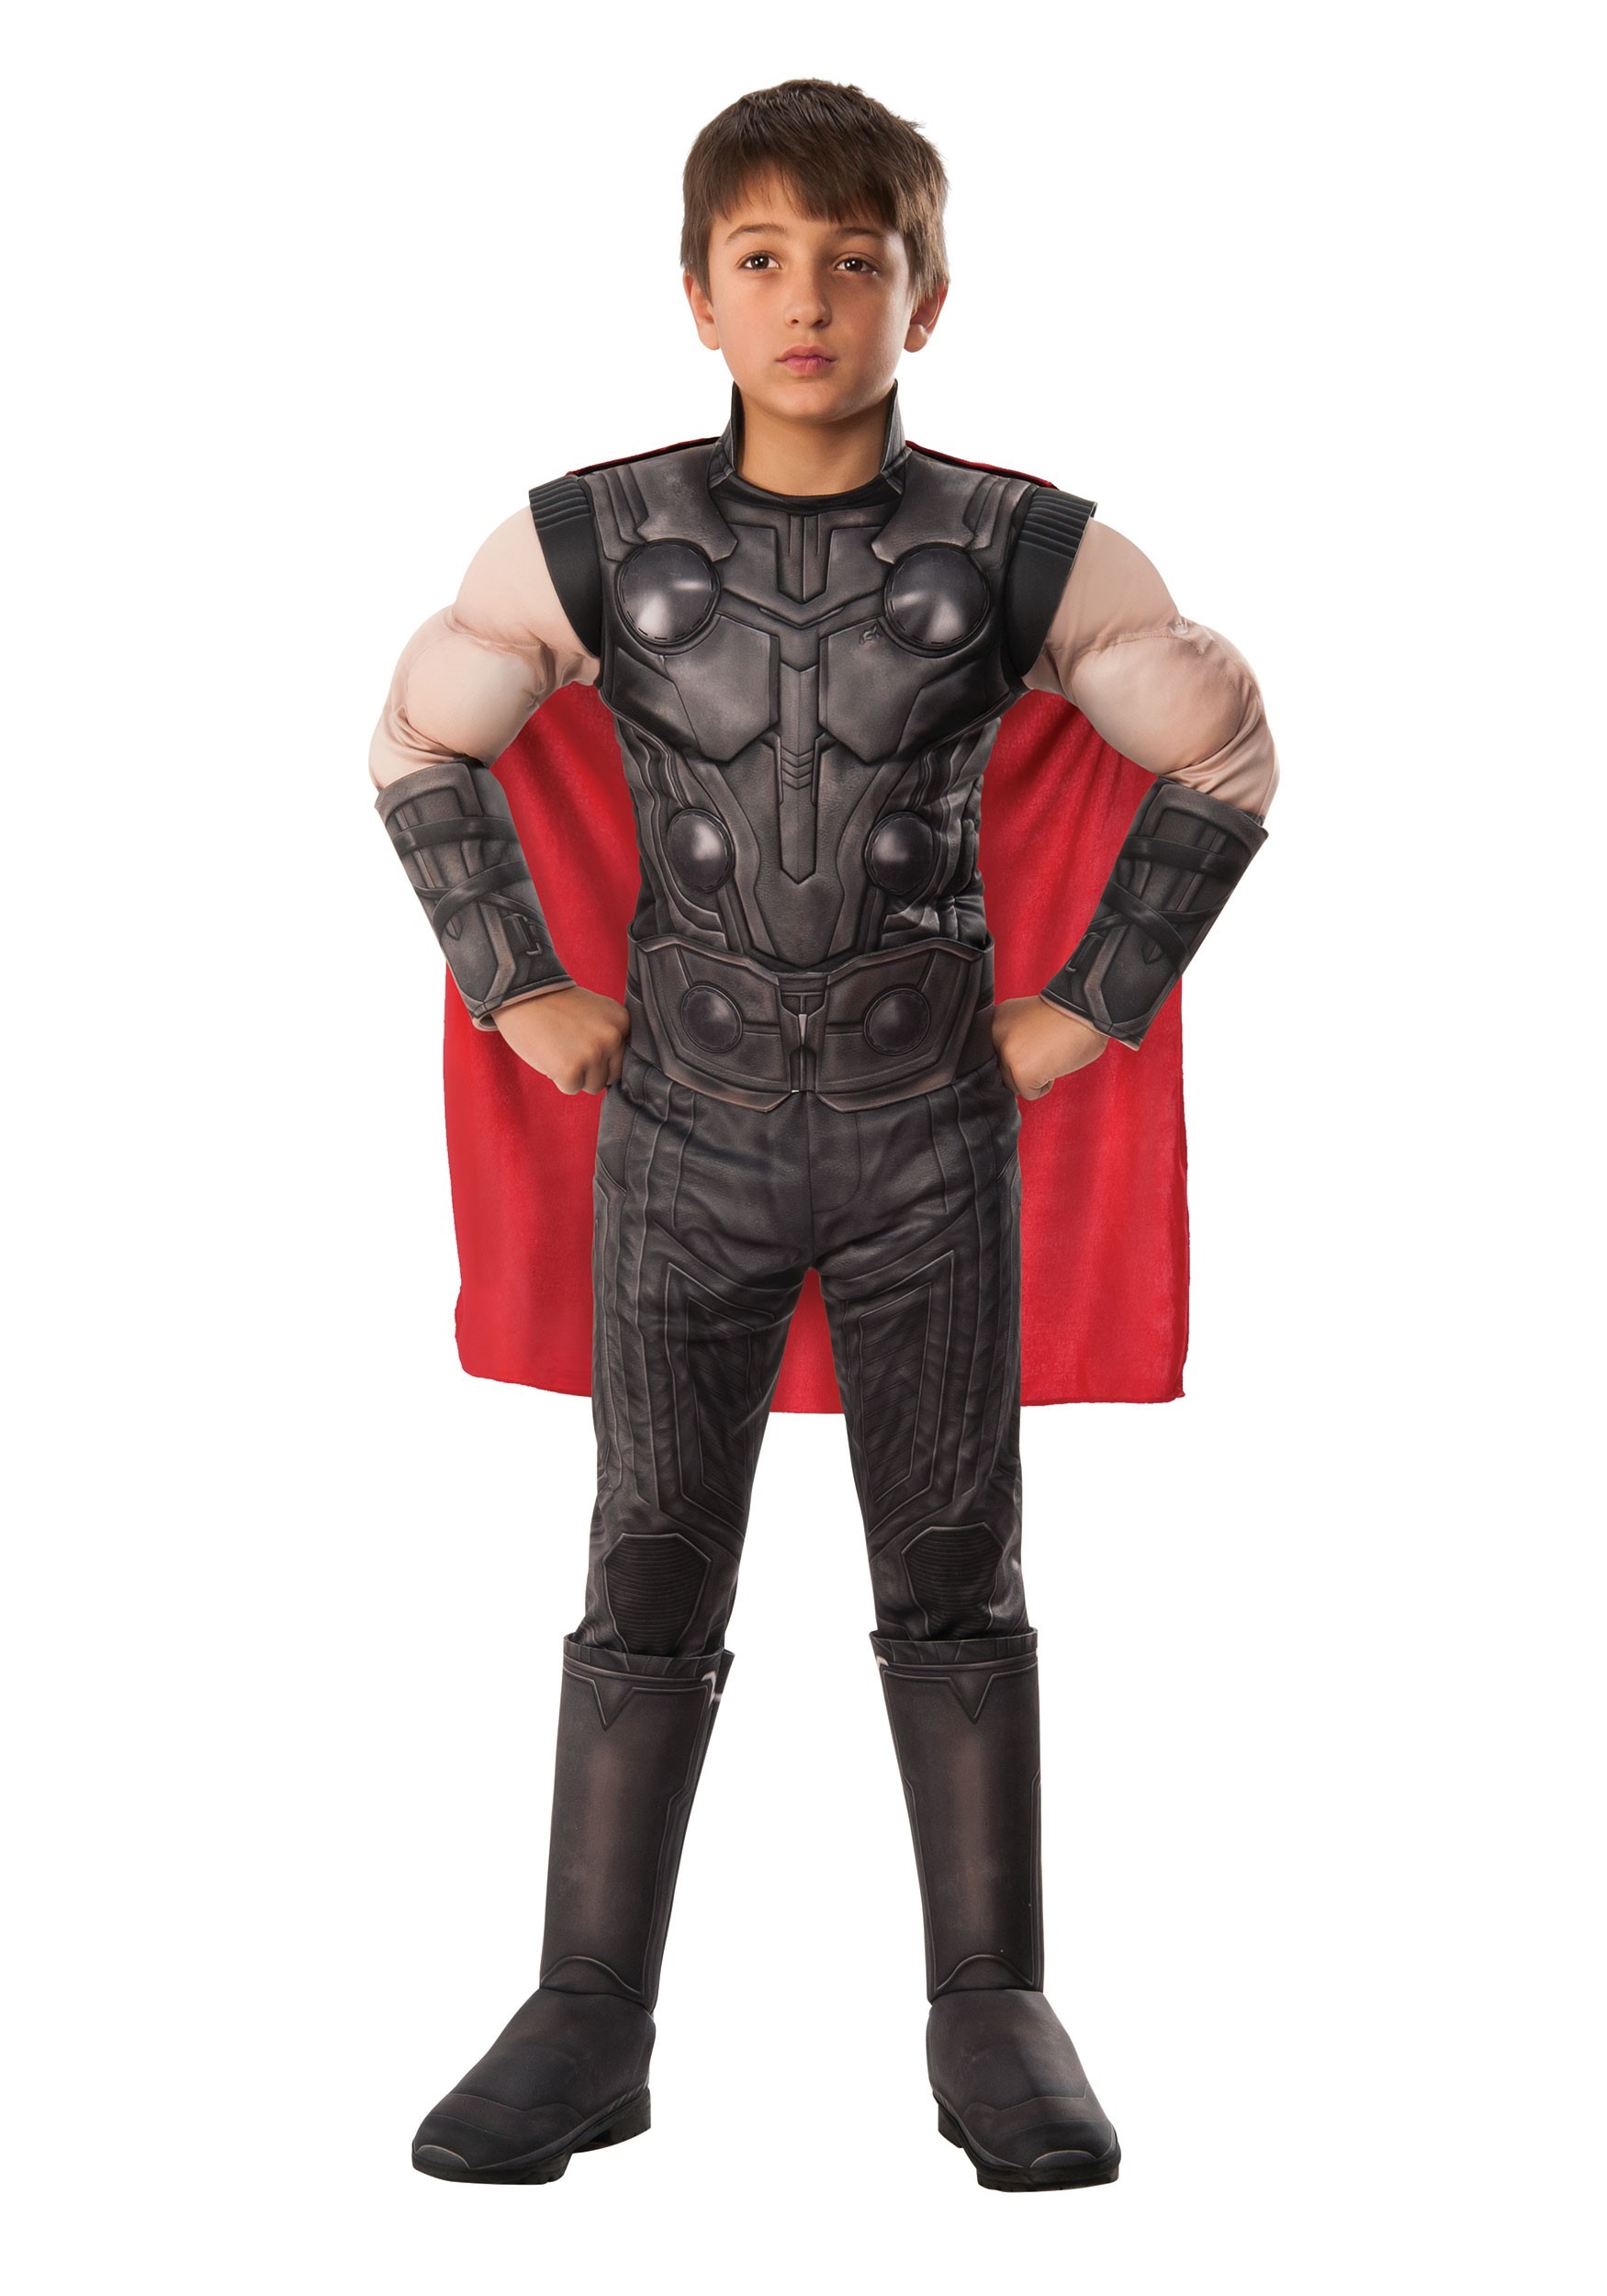 Image of Avengers Endgame Deluxe Thor Costume for Boys ID RU700673-S